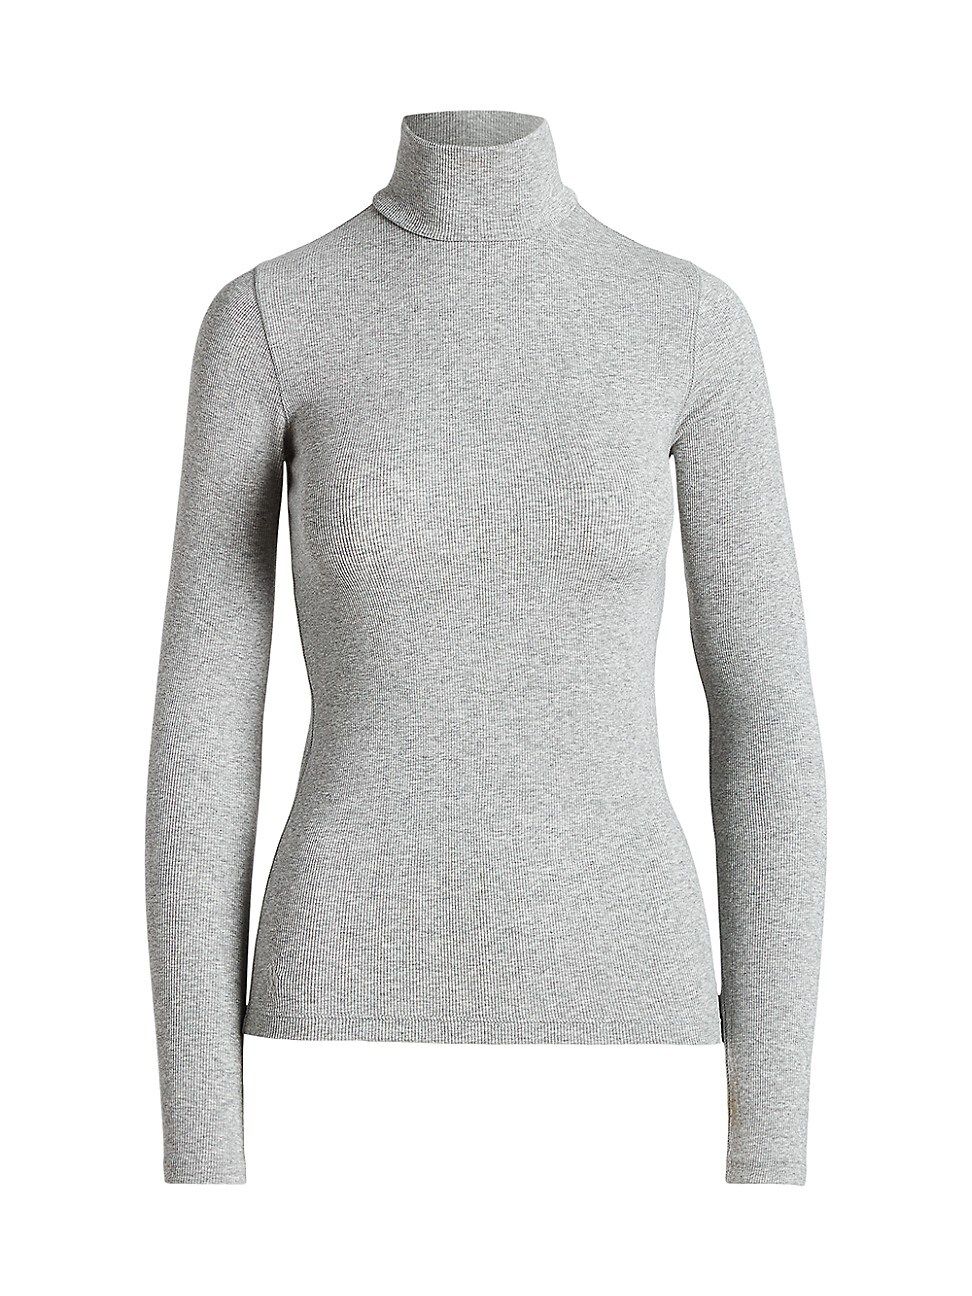 Women's Rib-Knit Turtleneck Sweater - Andover Heather Grey - Size XL | Saks Fifth Avenue